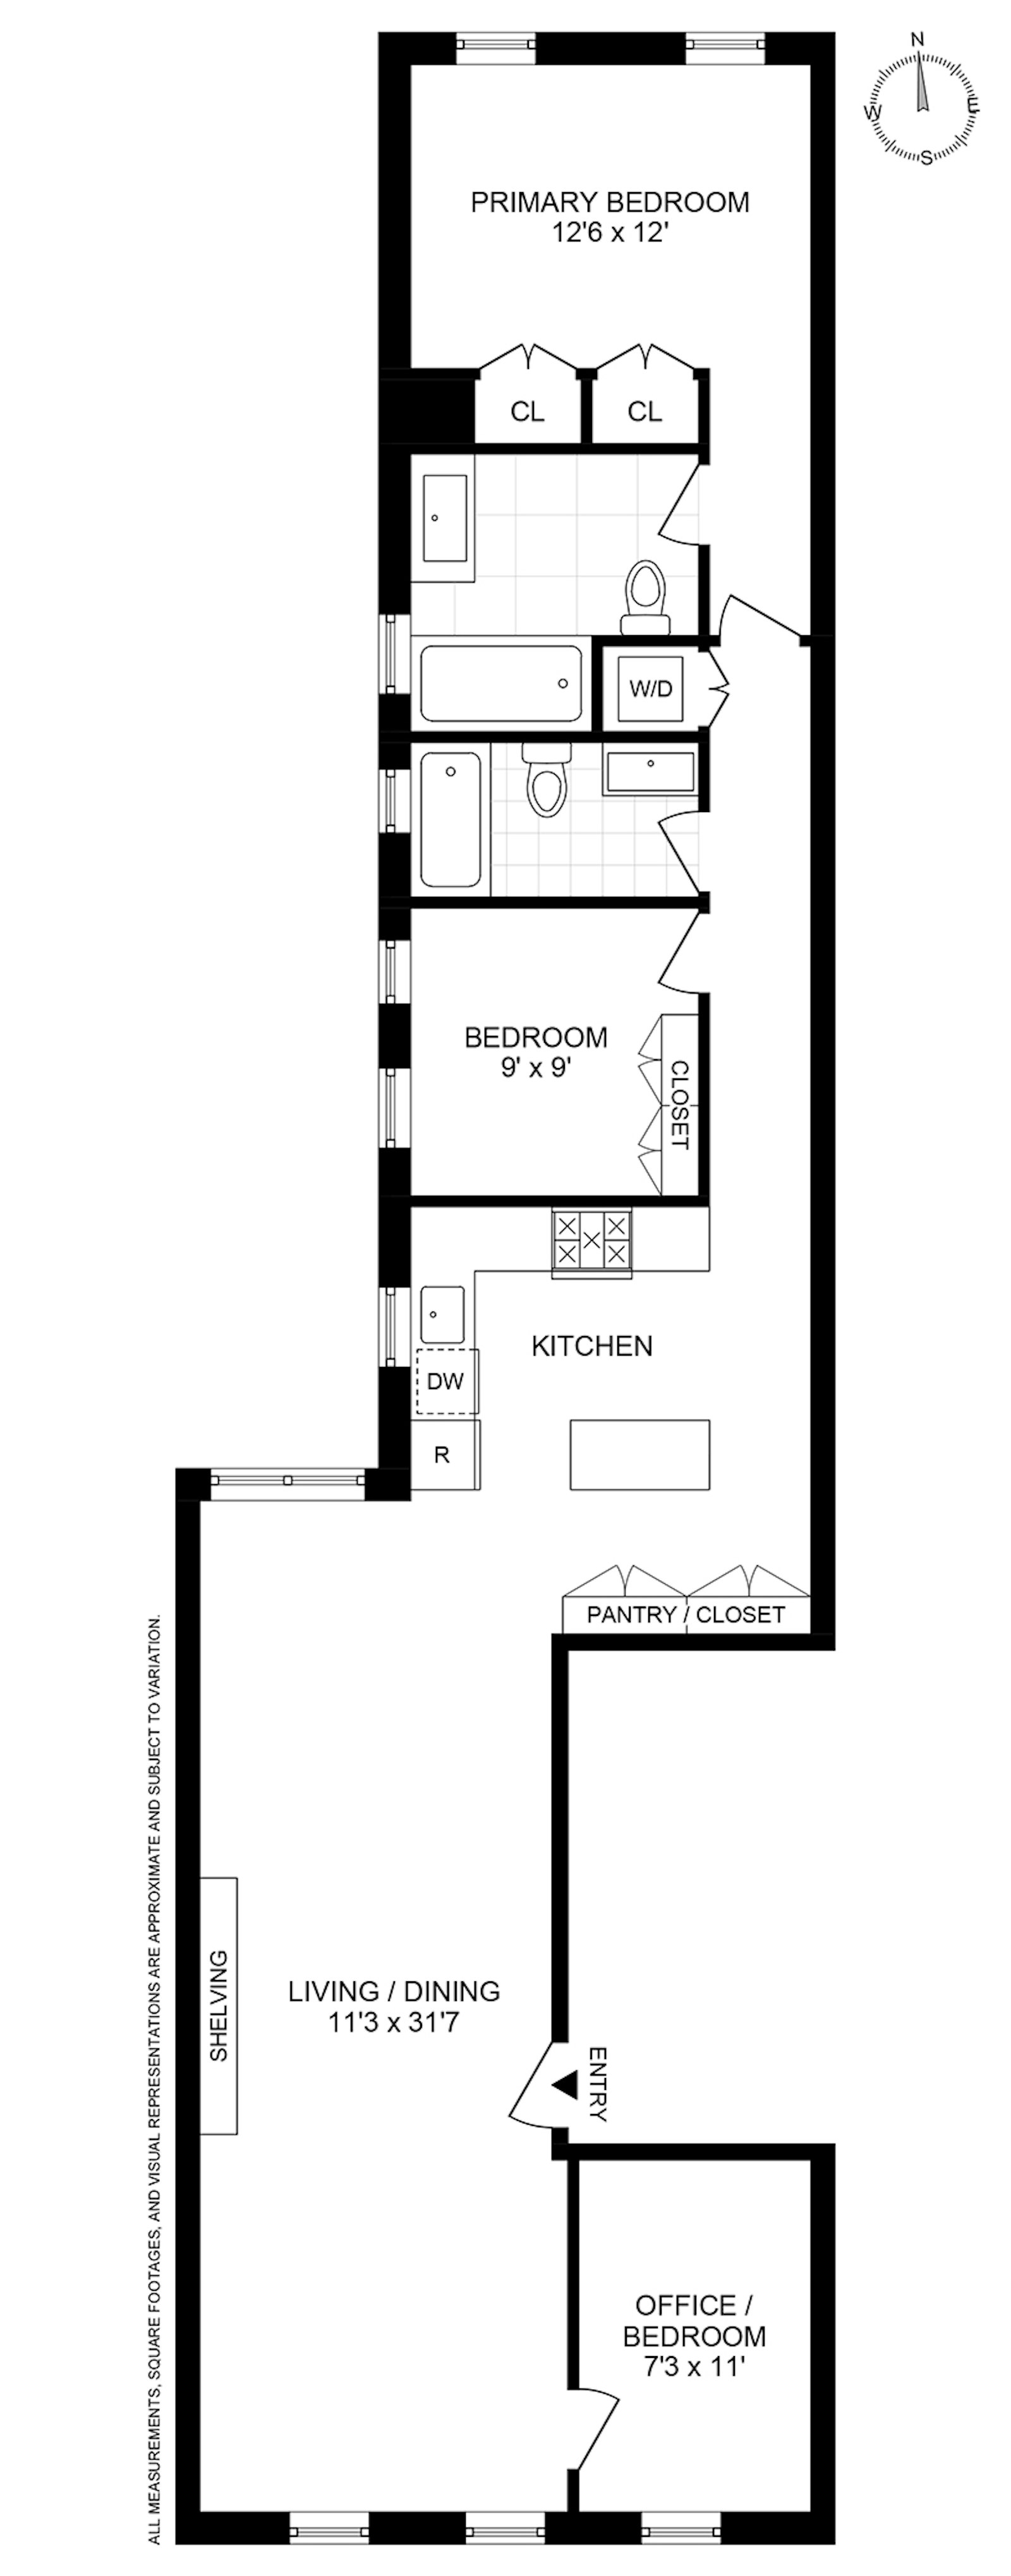 Floorplan for 917 Saint Marks Avenue, 2